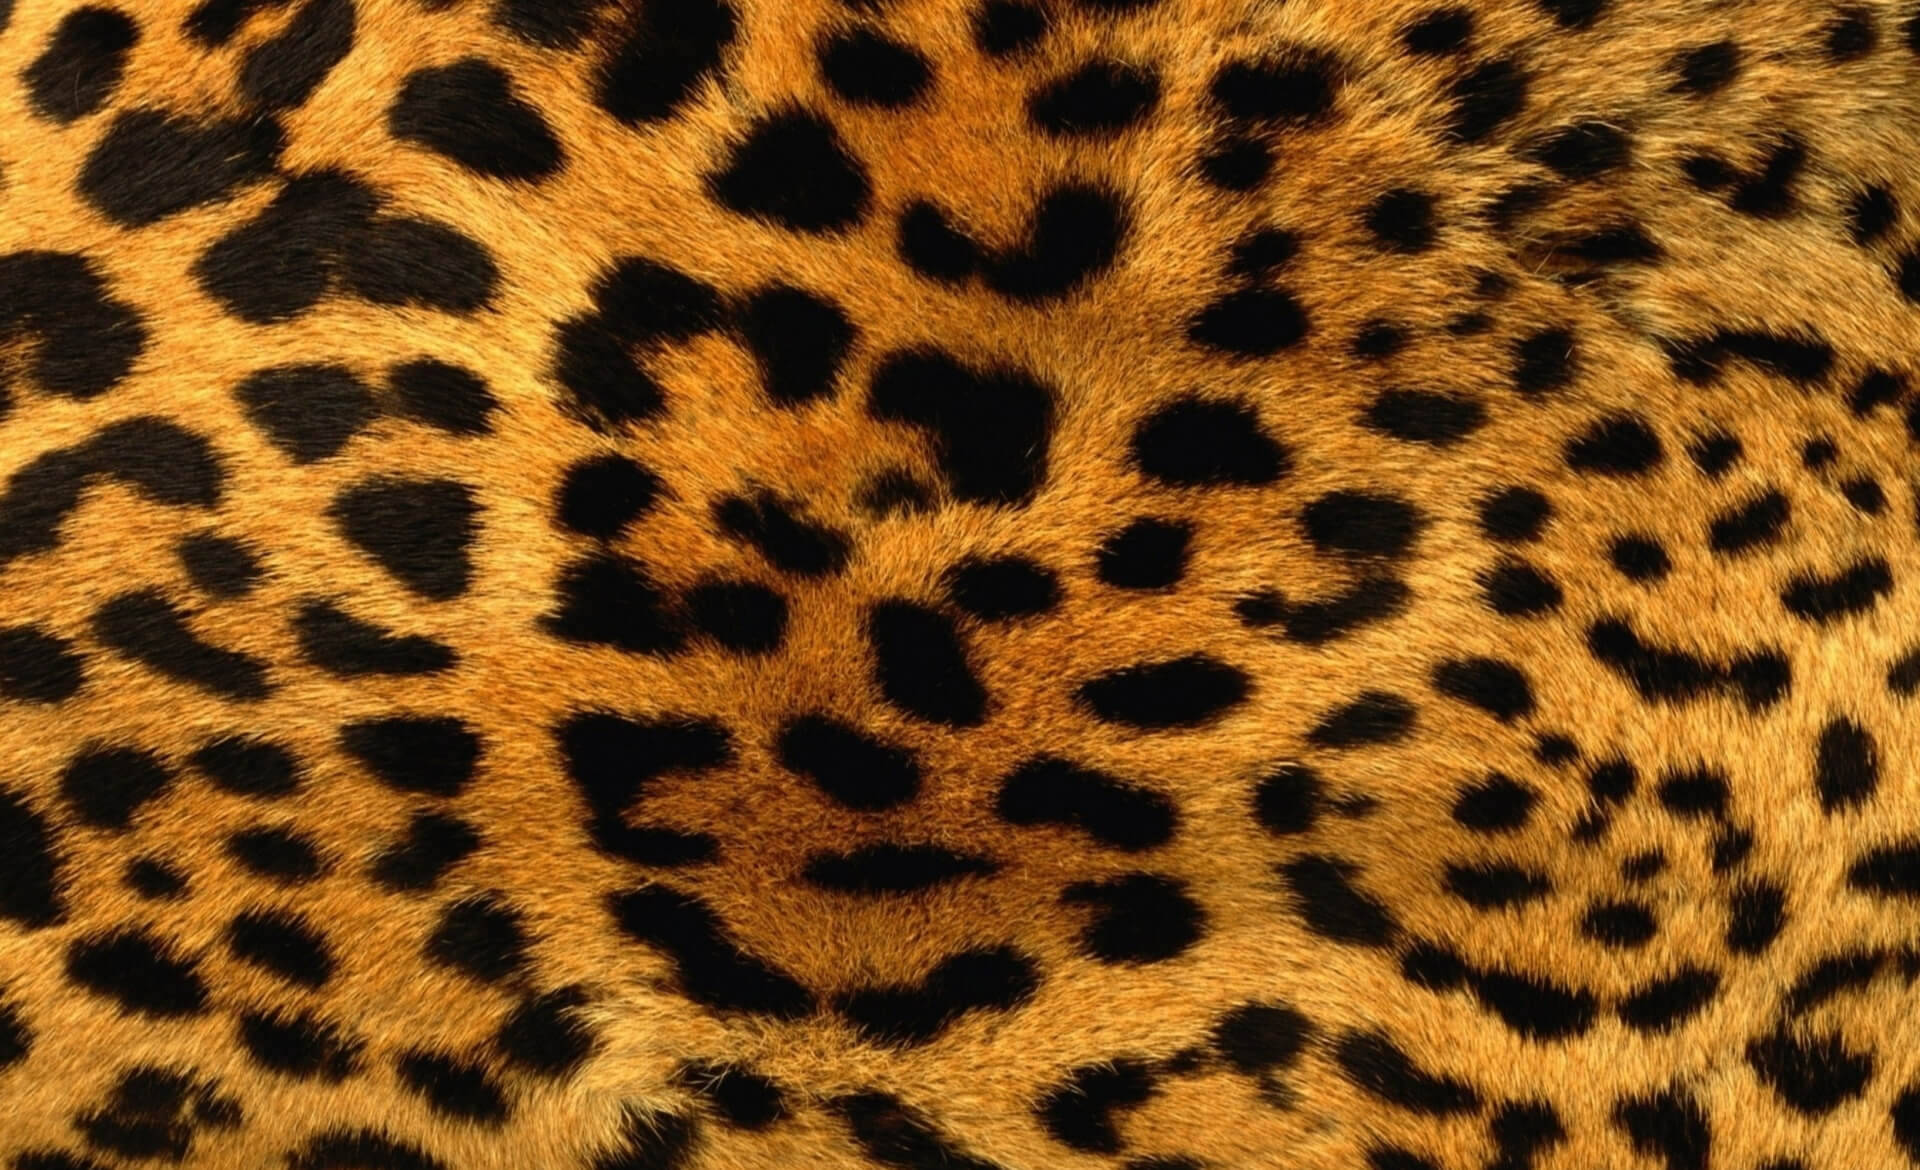 Leopard Print Pictures